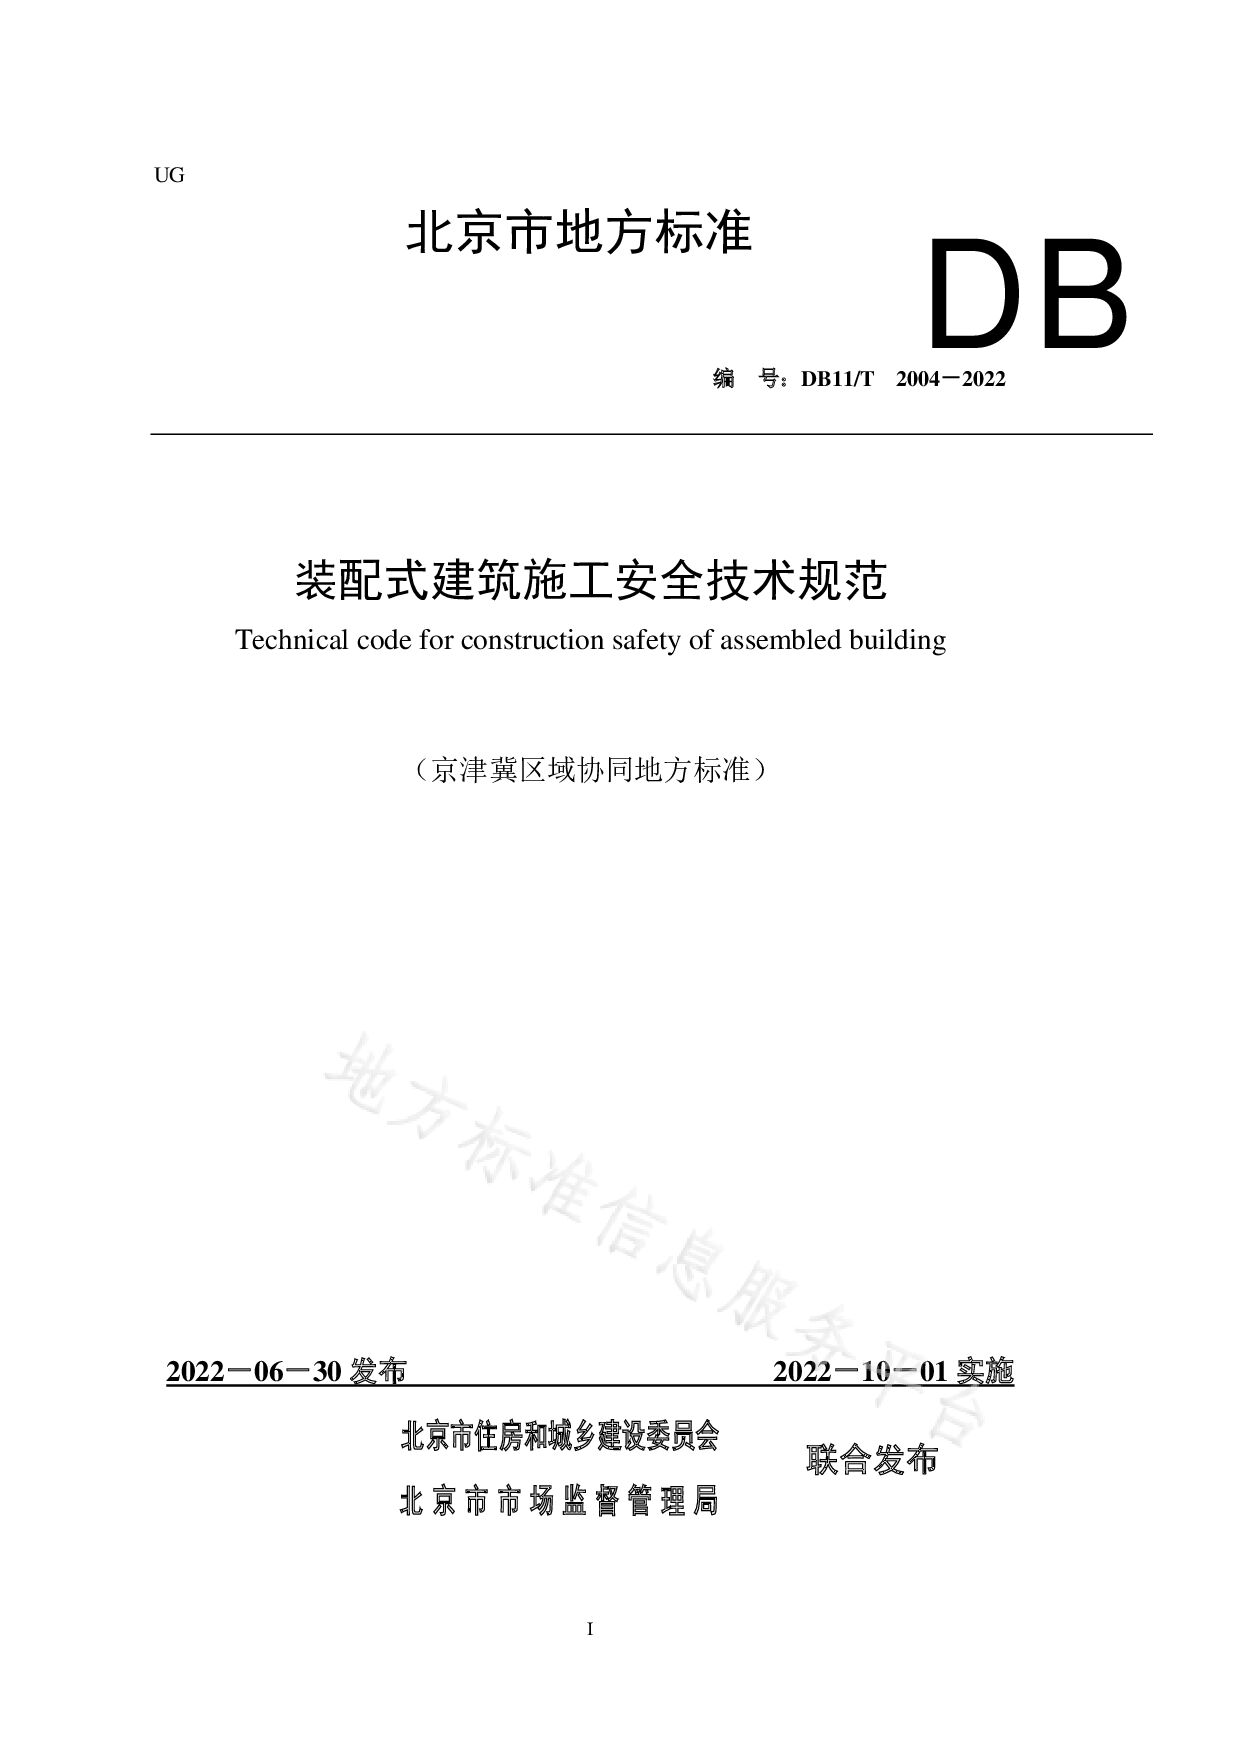 DB11/T 2004-2022